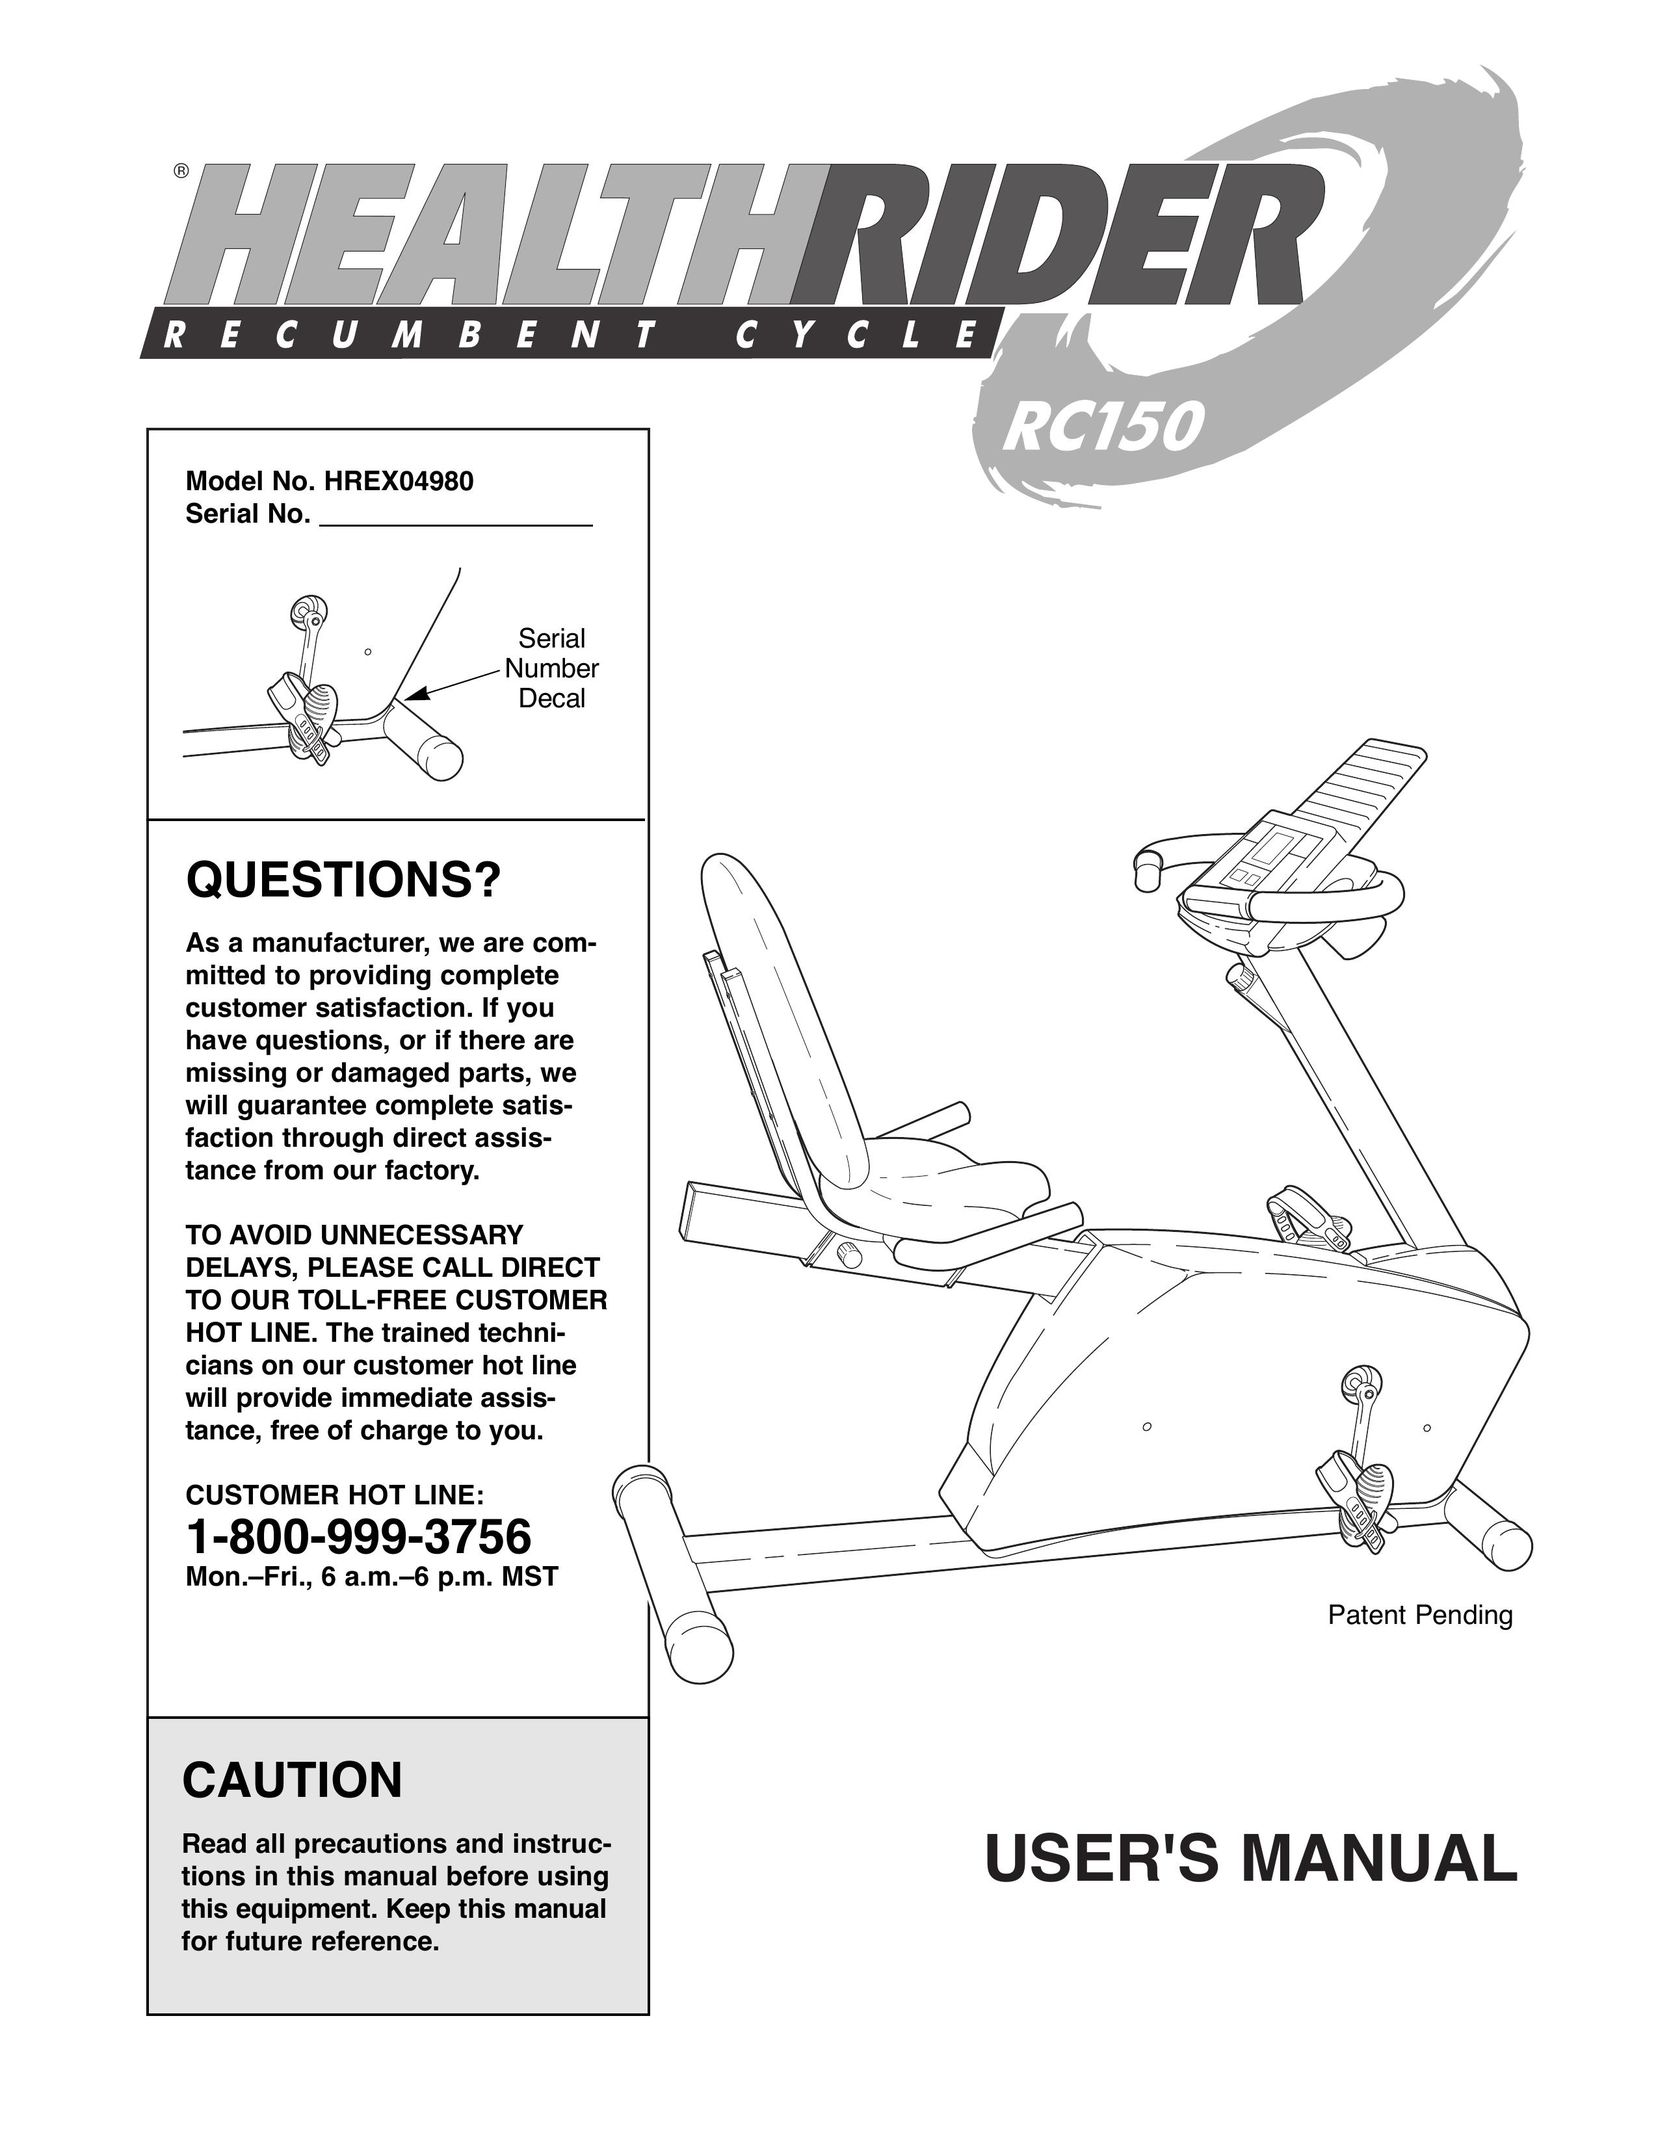 Healthrider HREX04980 Home Gym User Manual